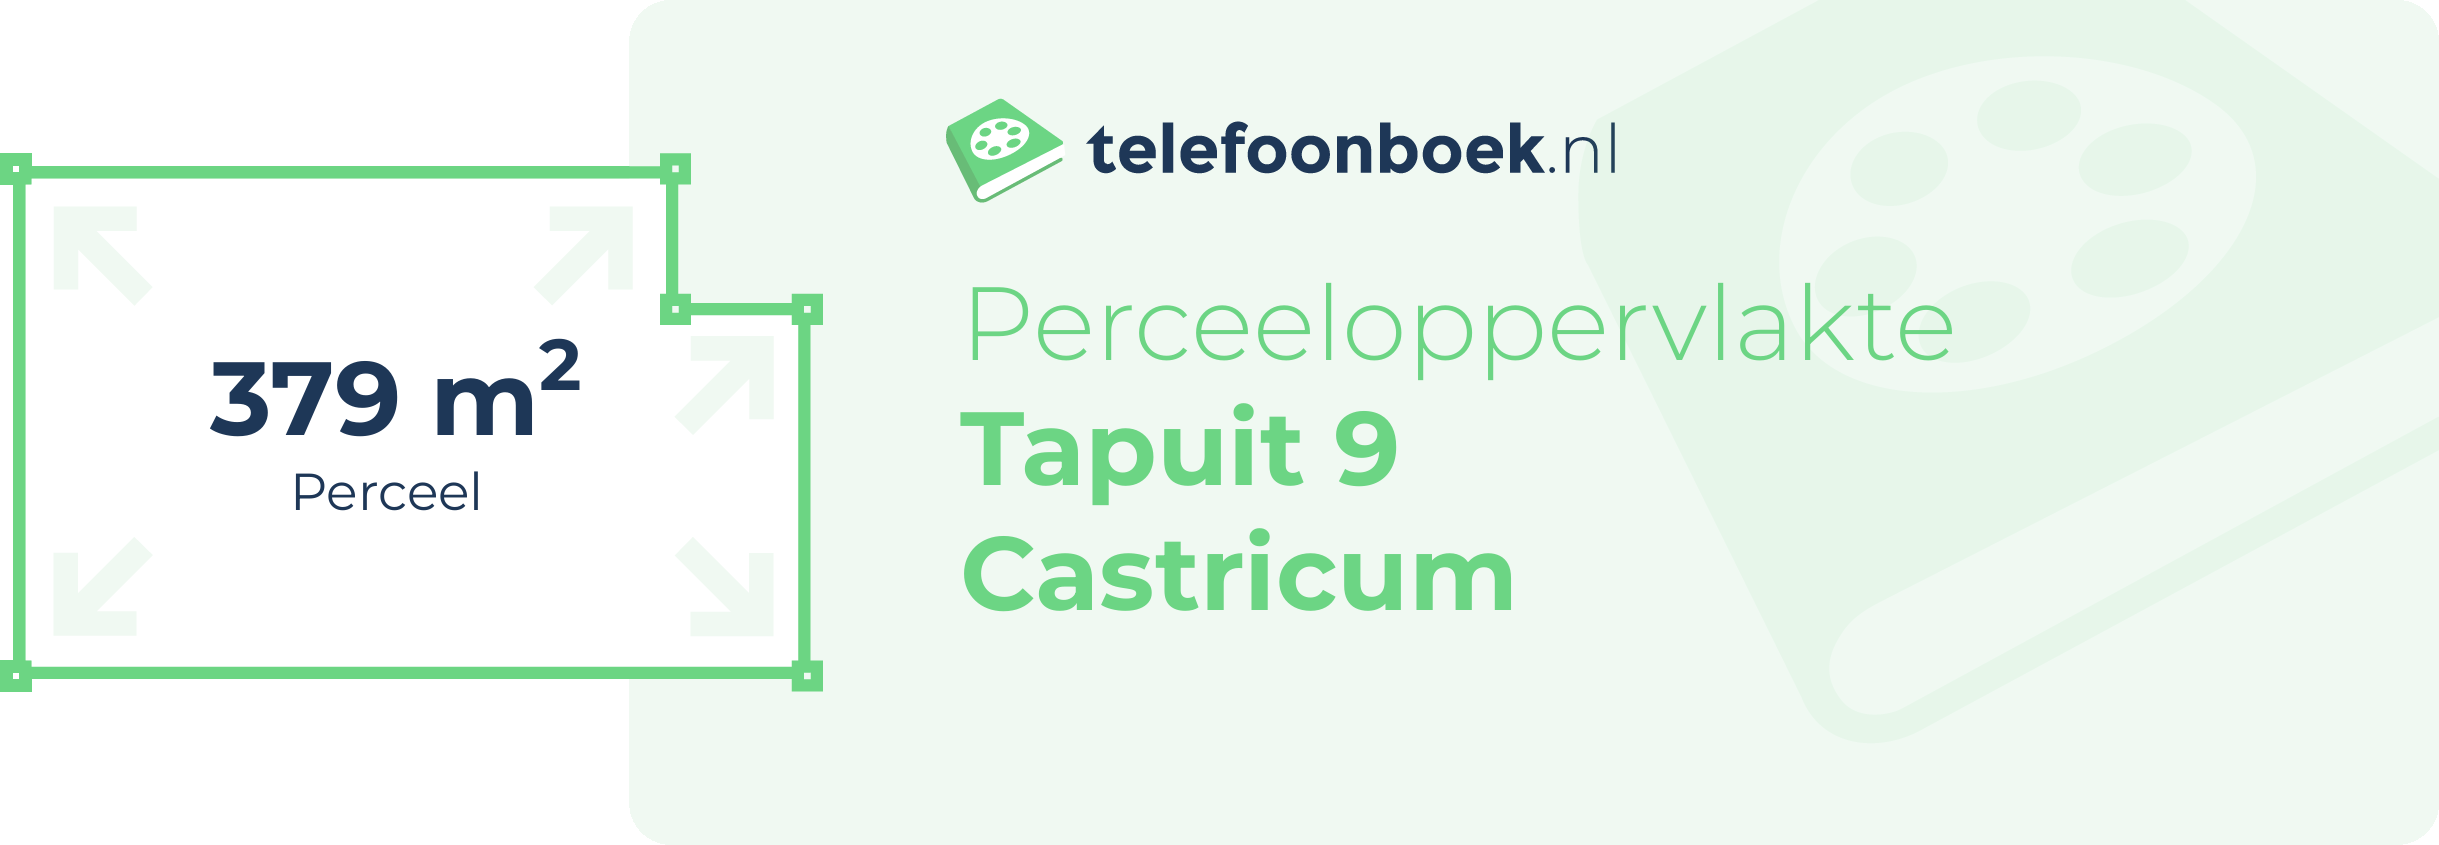 Perceeloppervlakte Tapuit 9 Castricum